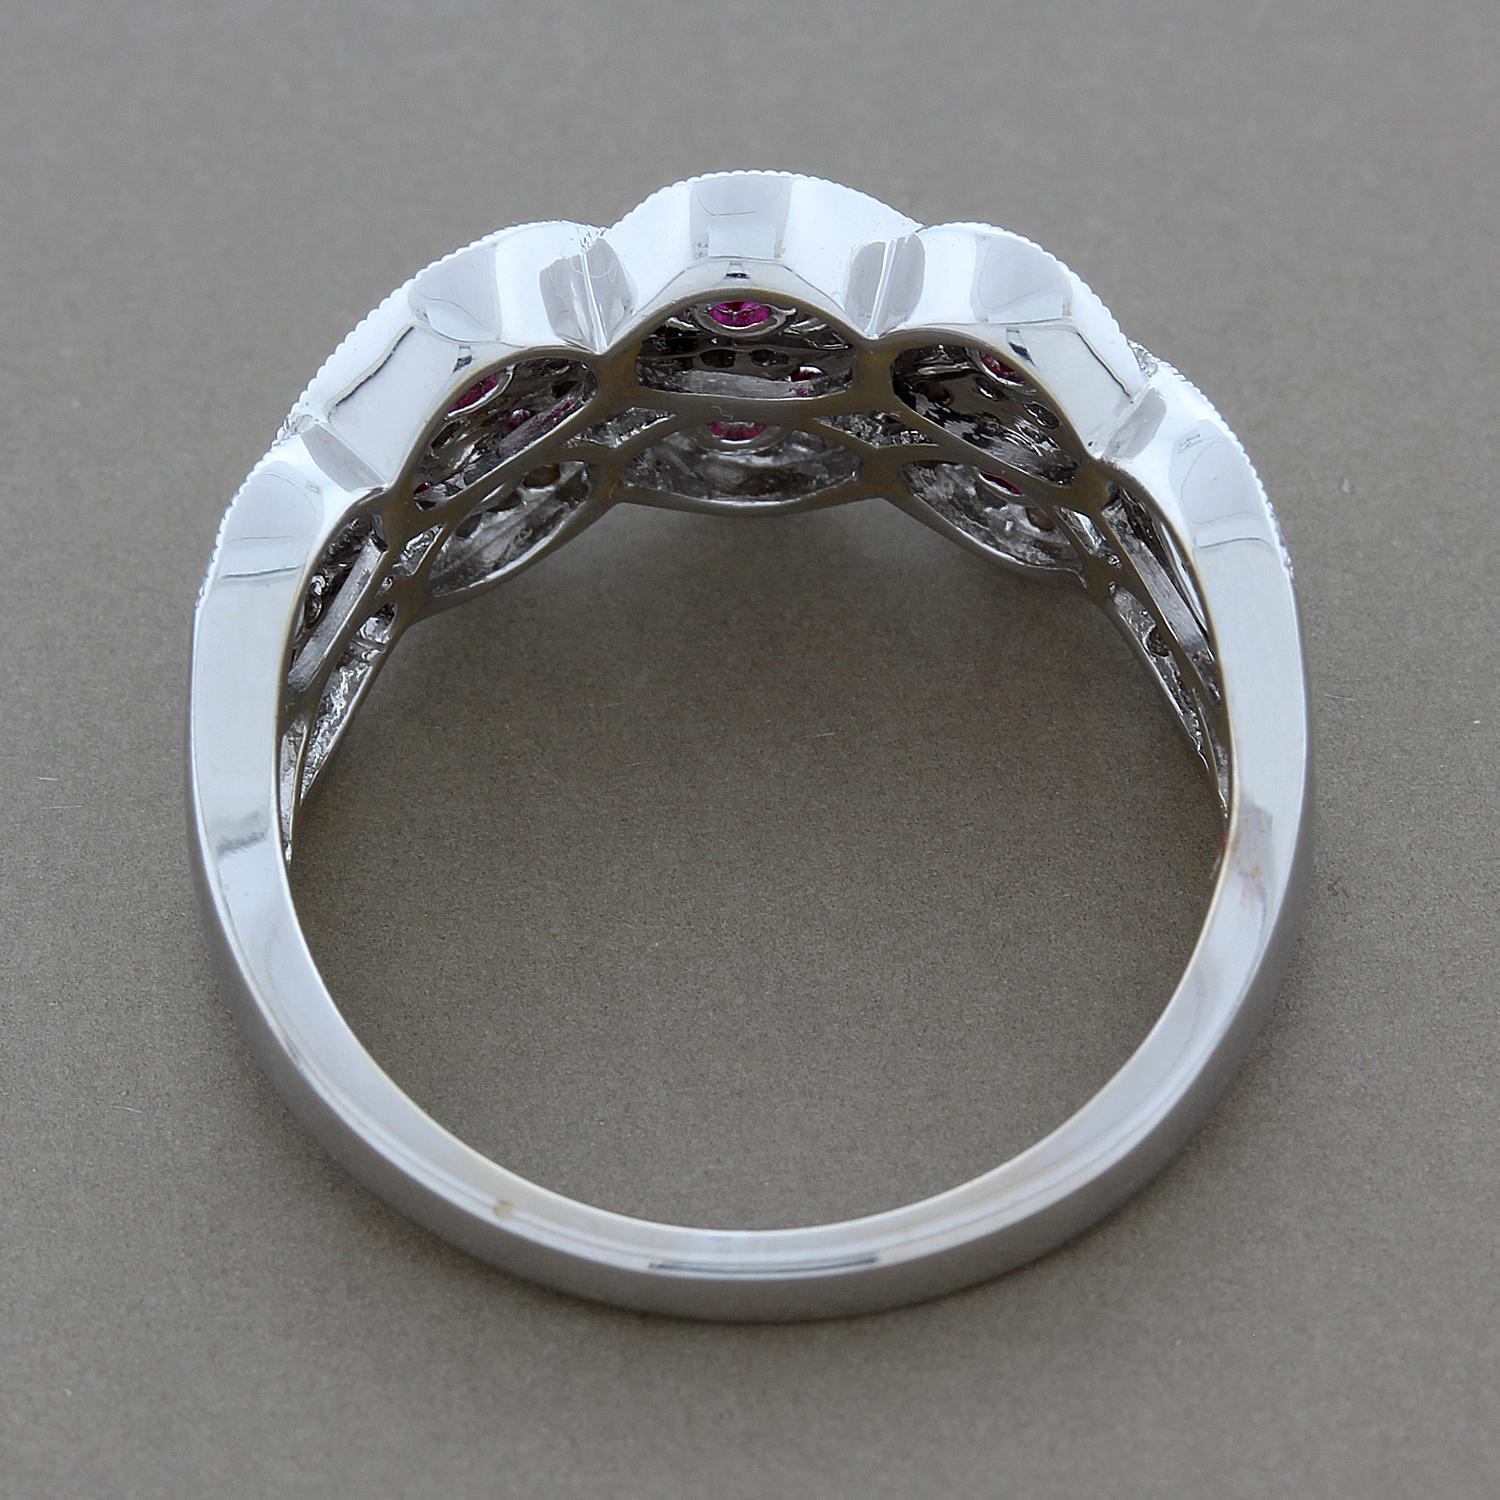 Women's Ruby Diamond Gold Ring